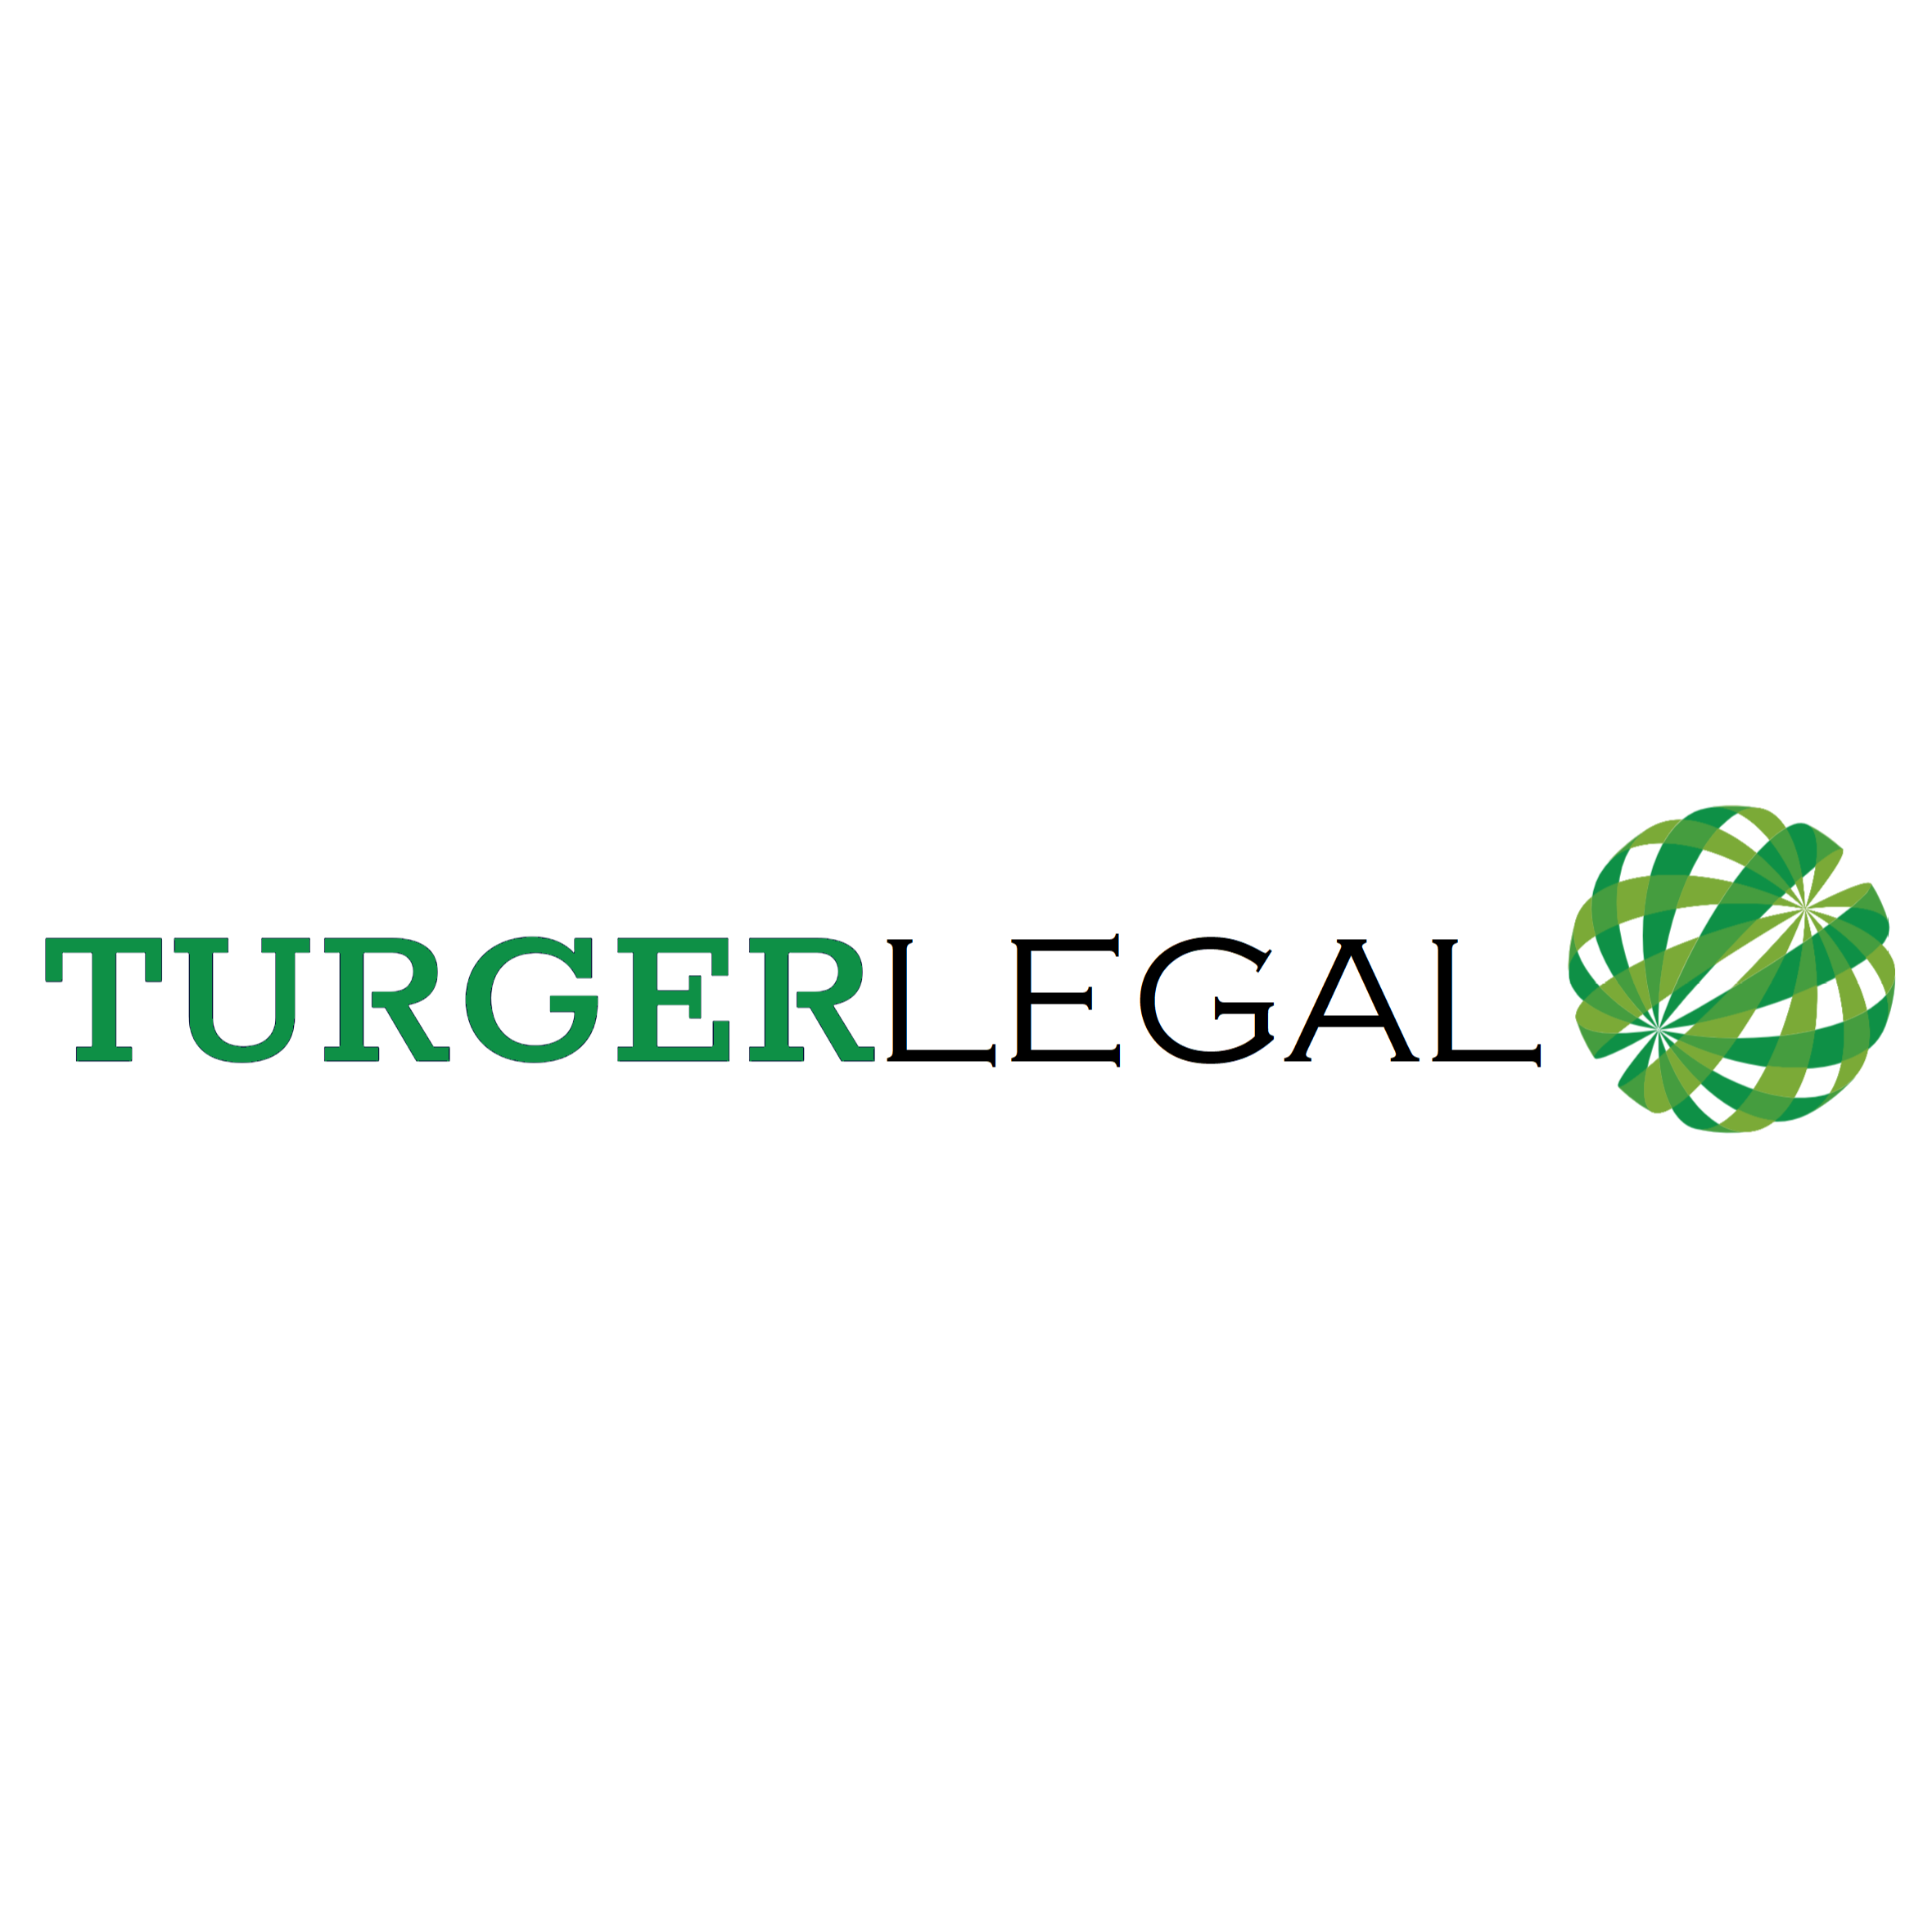 TURGERLEGAL - Rechtsanwalt Volkan Erdogan in Berlin - Logo